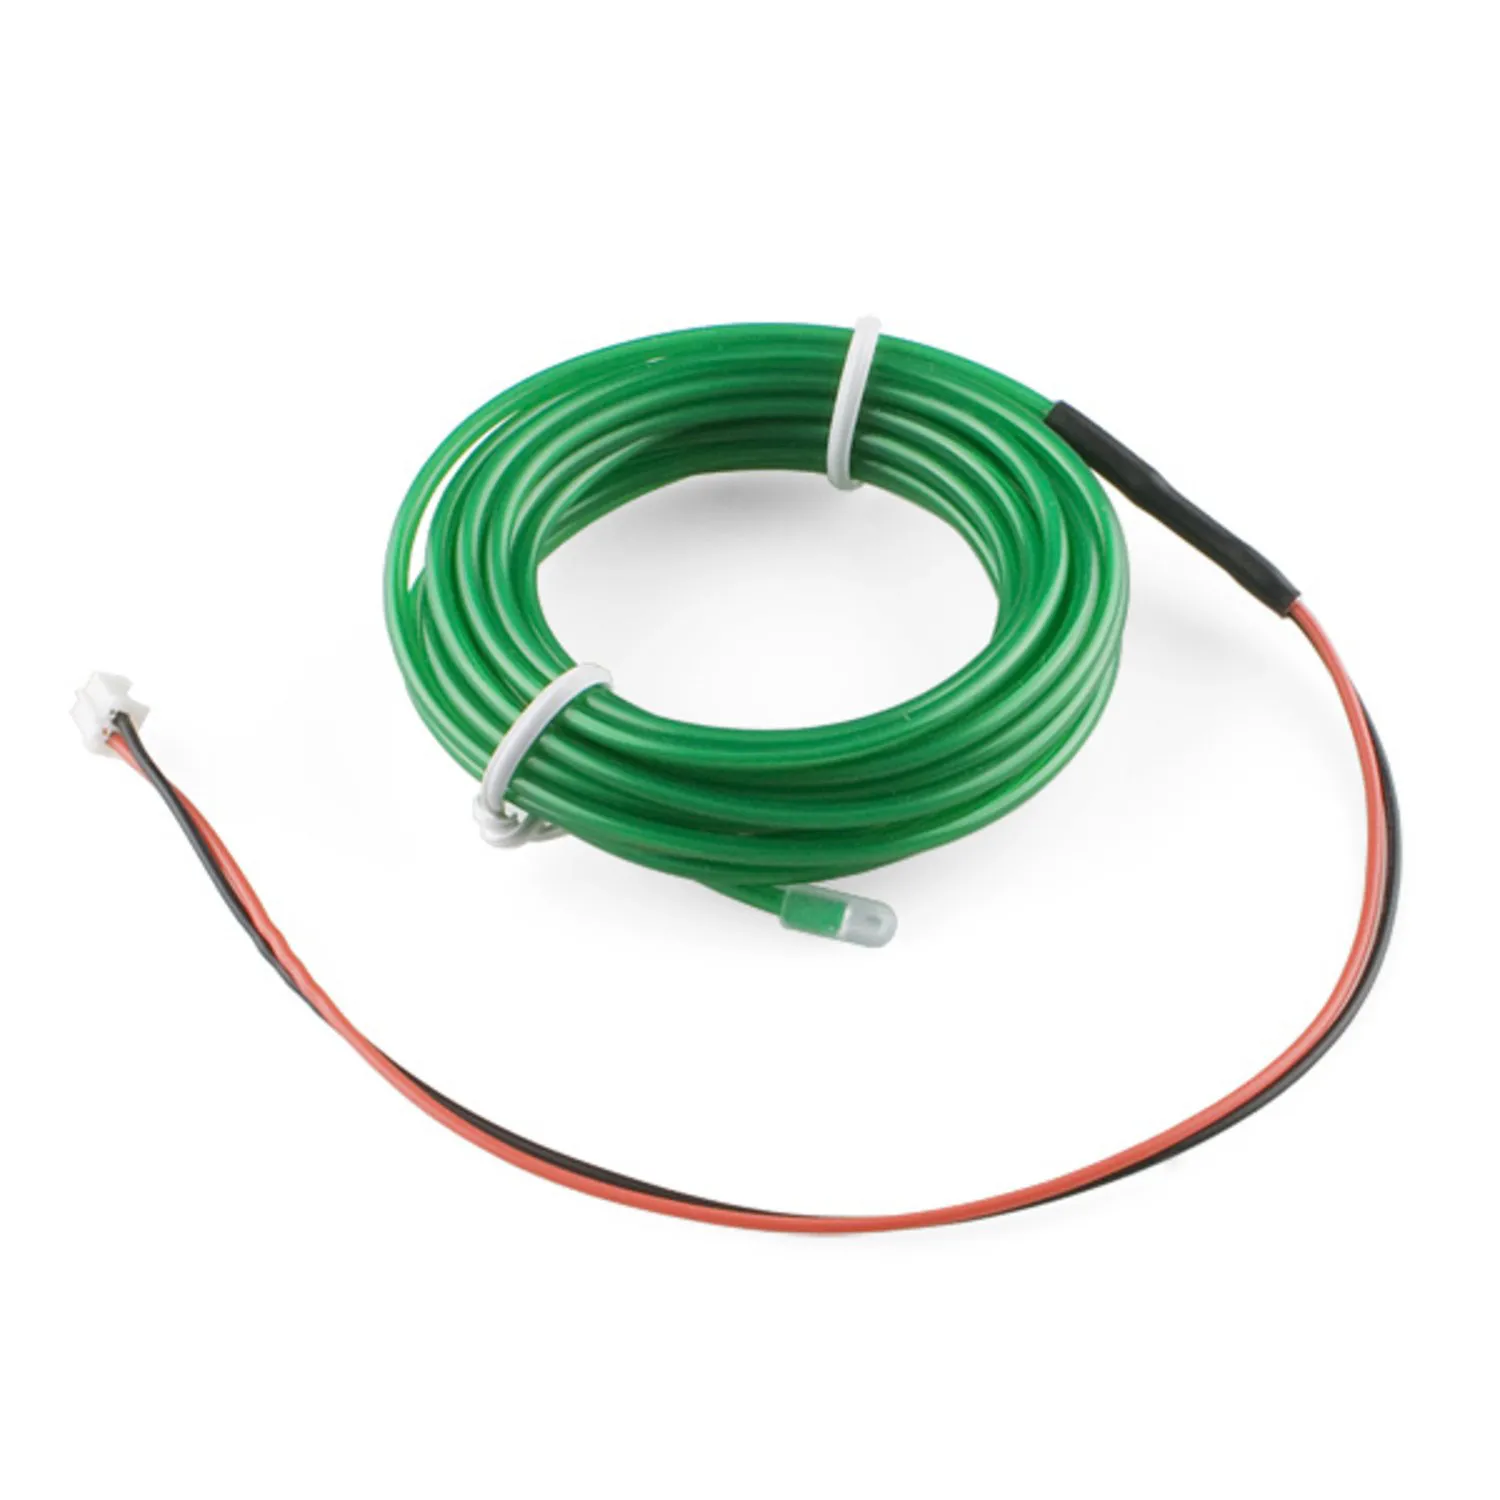 Photo of EL Wire - Green 3m